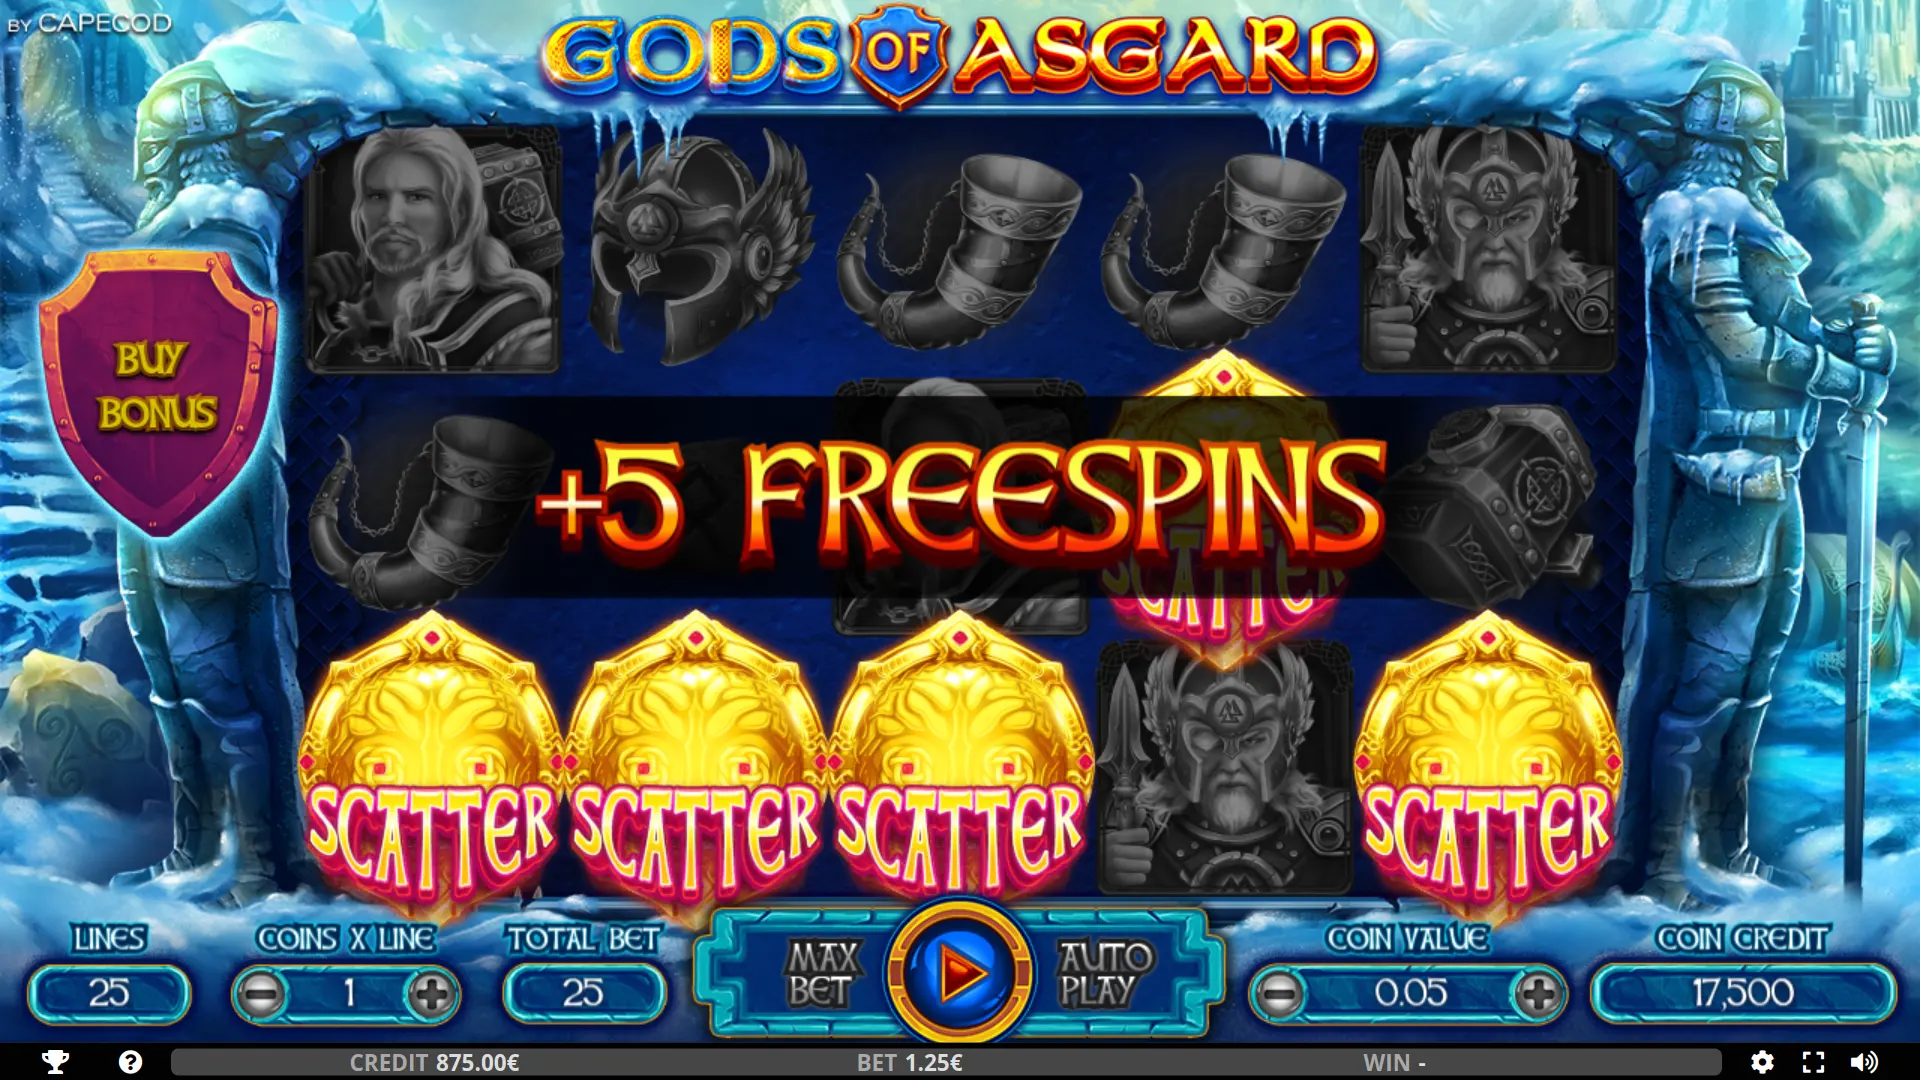 Gods of Asgard Free Spins